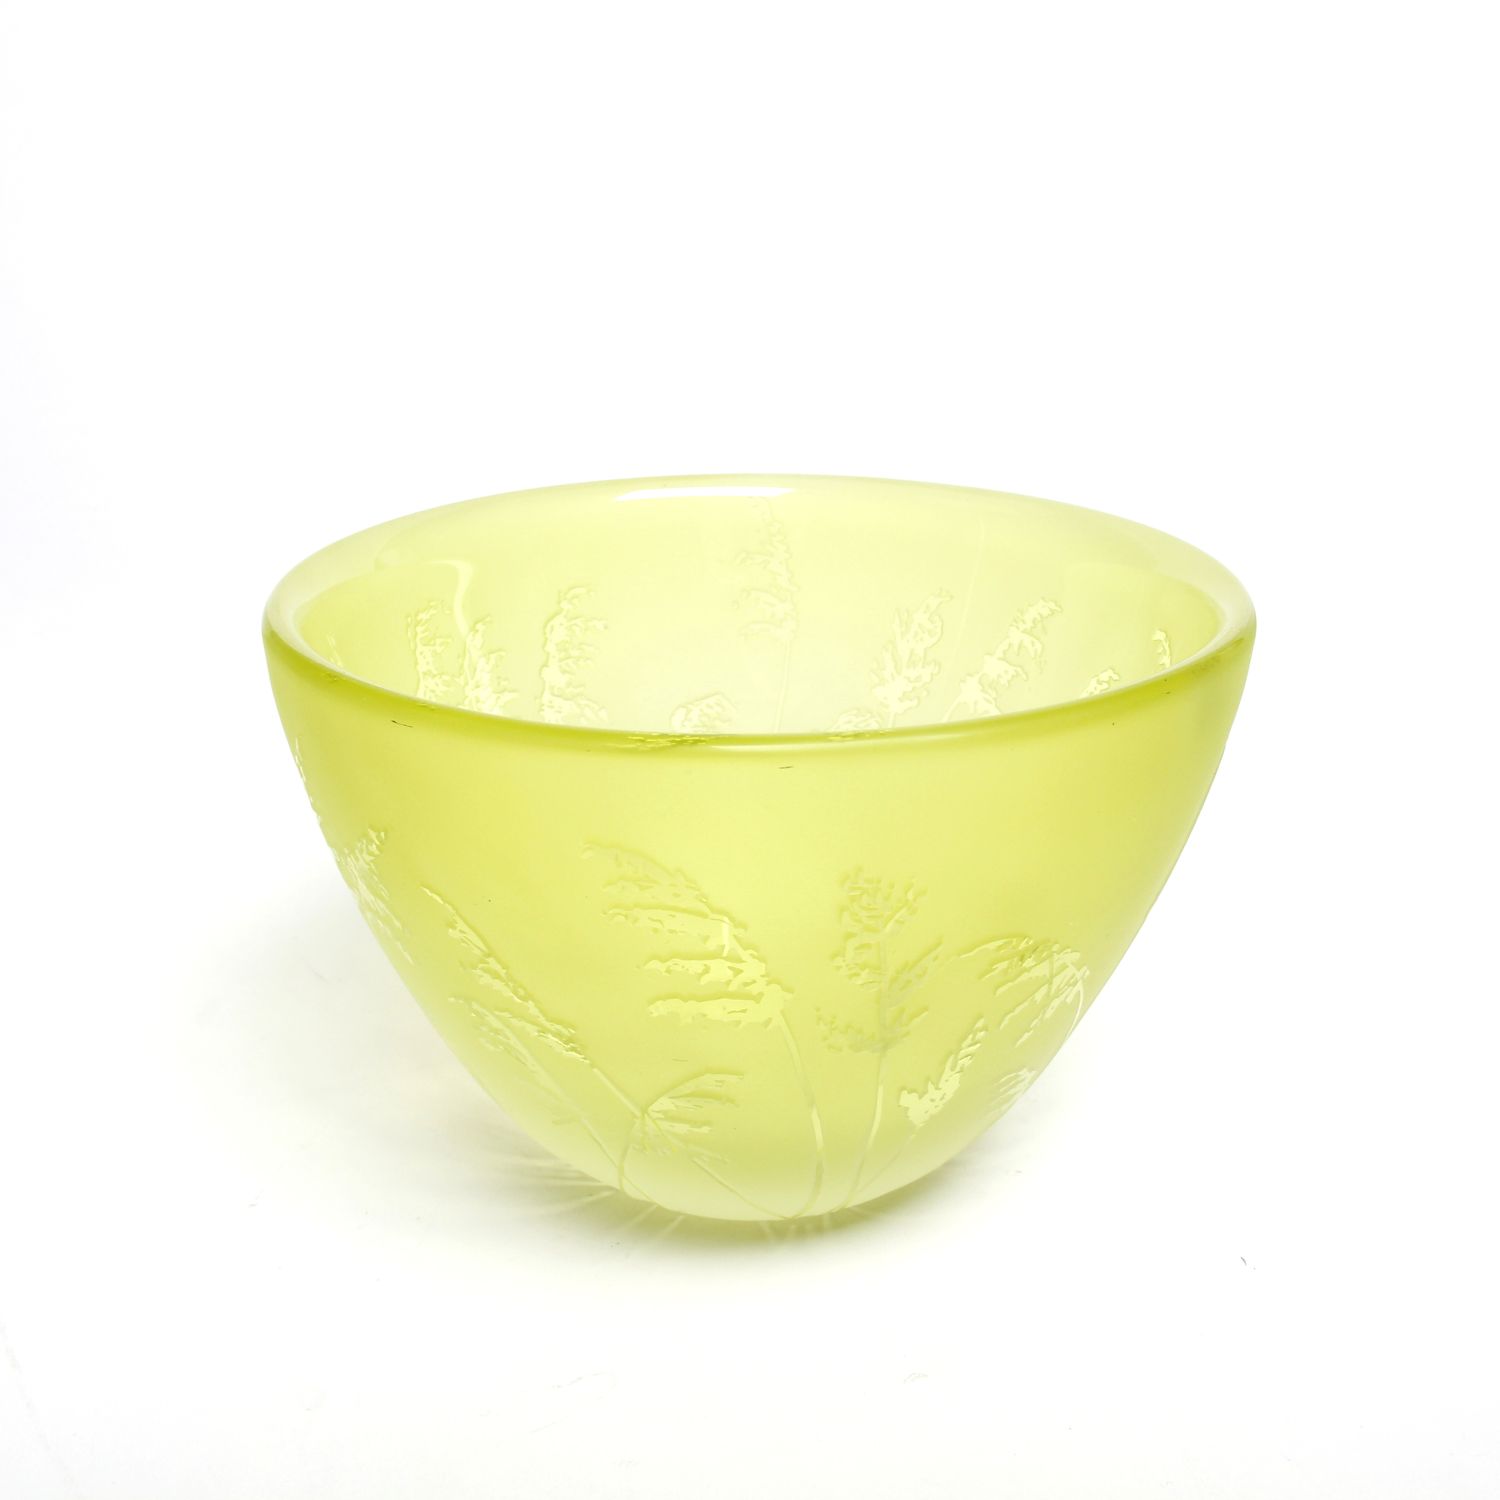 Carol Nesbitt: Big Green Bowl Glass Product Image 1 of 2